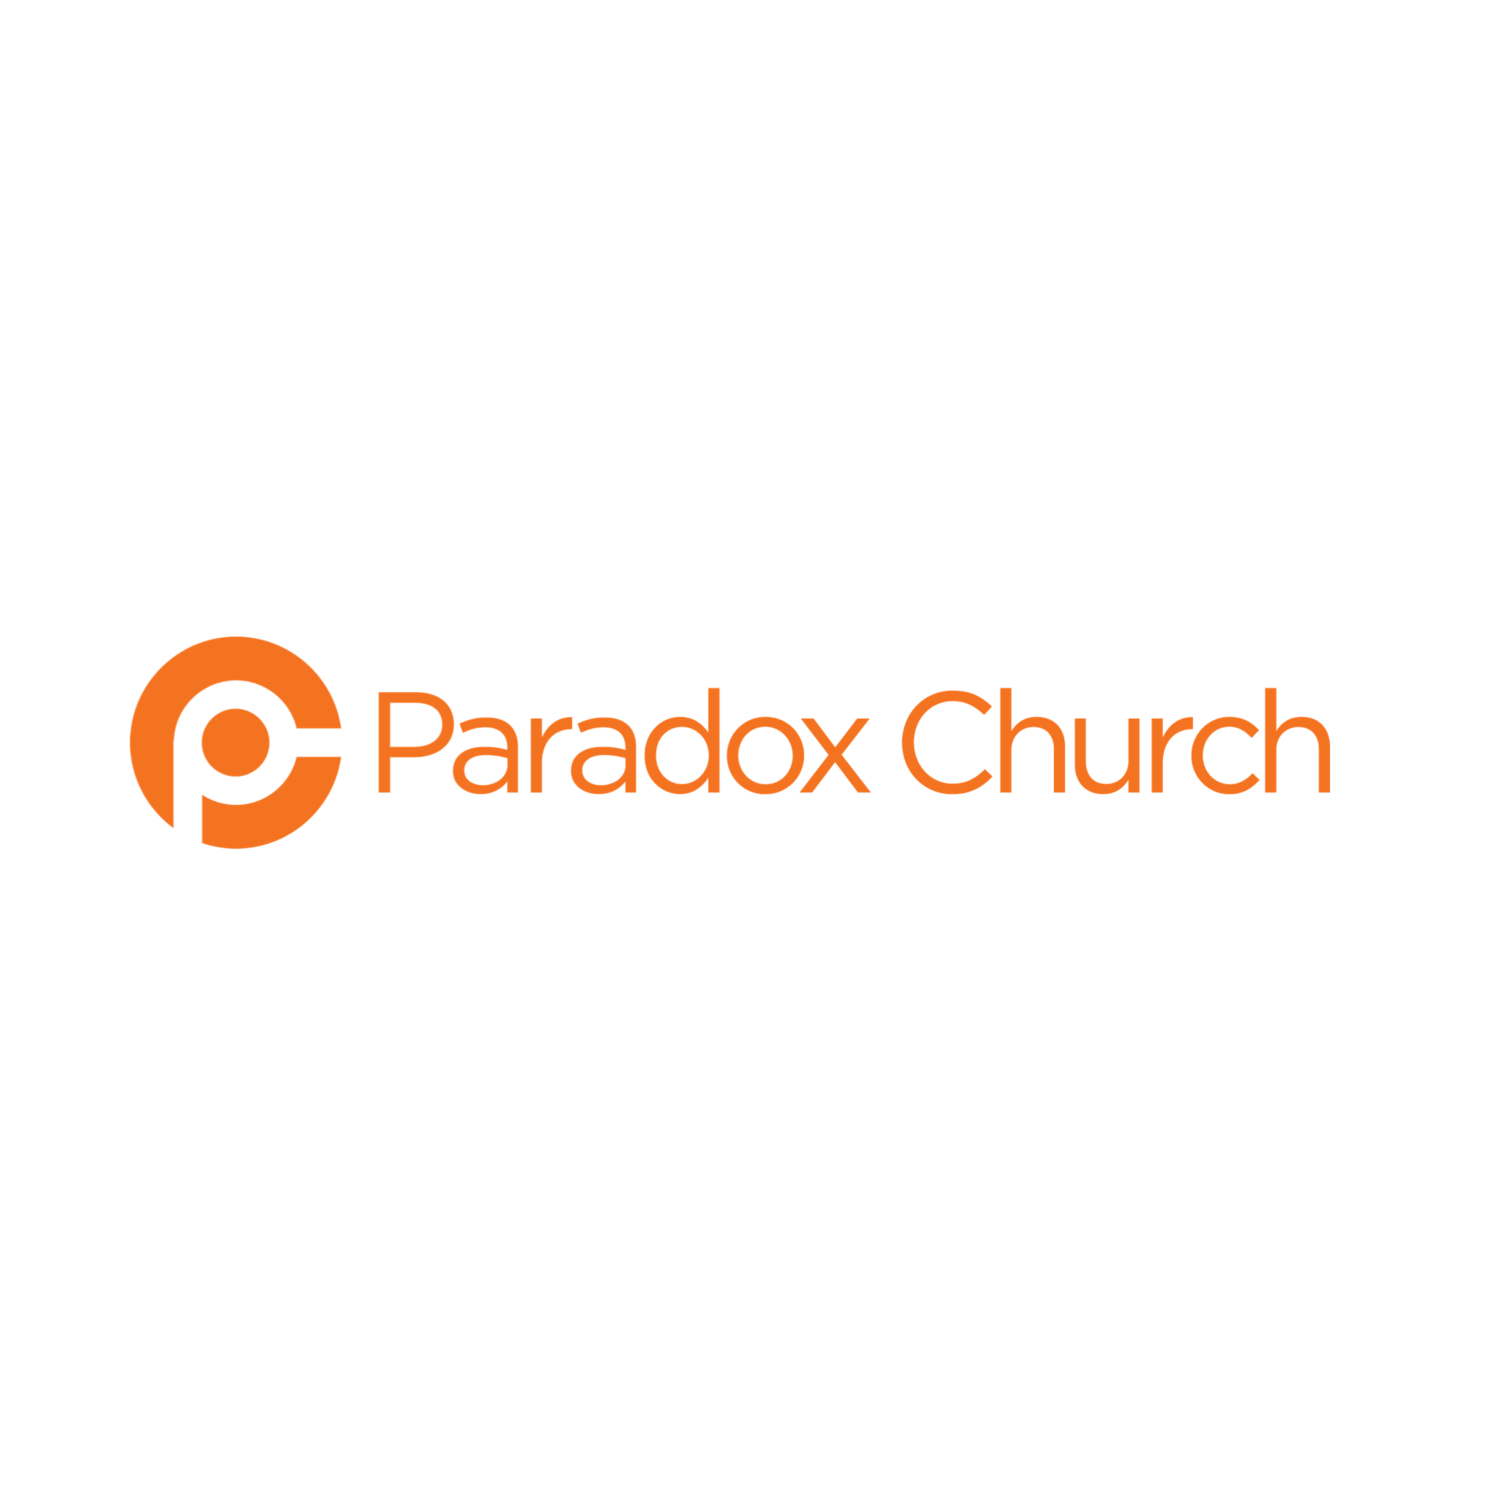 Paradox Church Messages